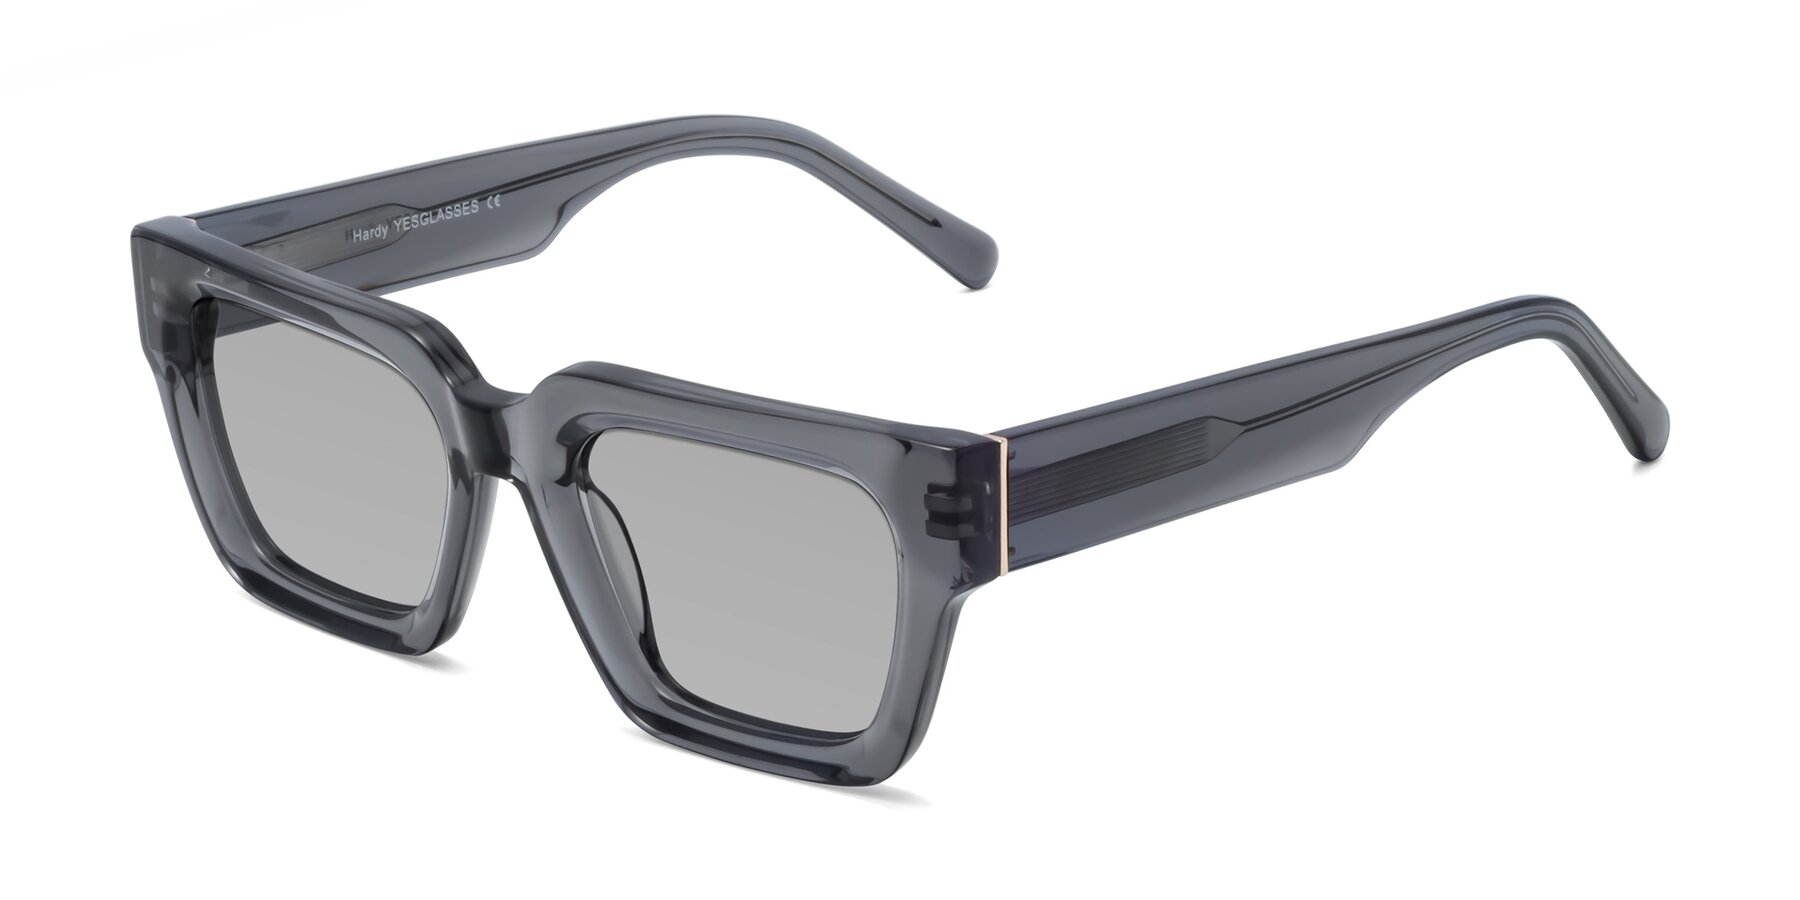 Huntermoon Square Rimless Sunglasses,Summer Glasses Fashion Sun Glasses for Men,Women,Oversized Sun Glasses, adult Unisex, Size: One size, Gray